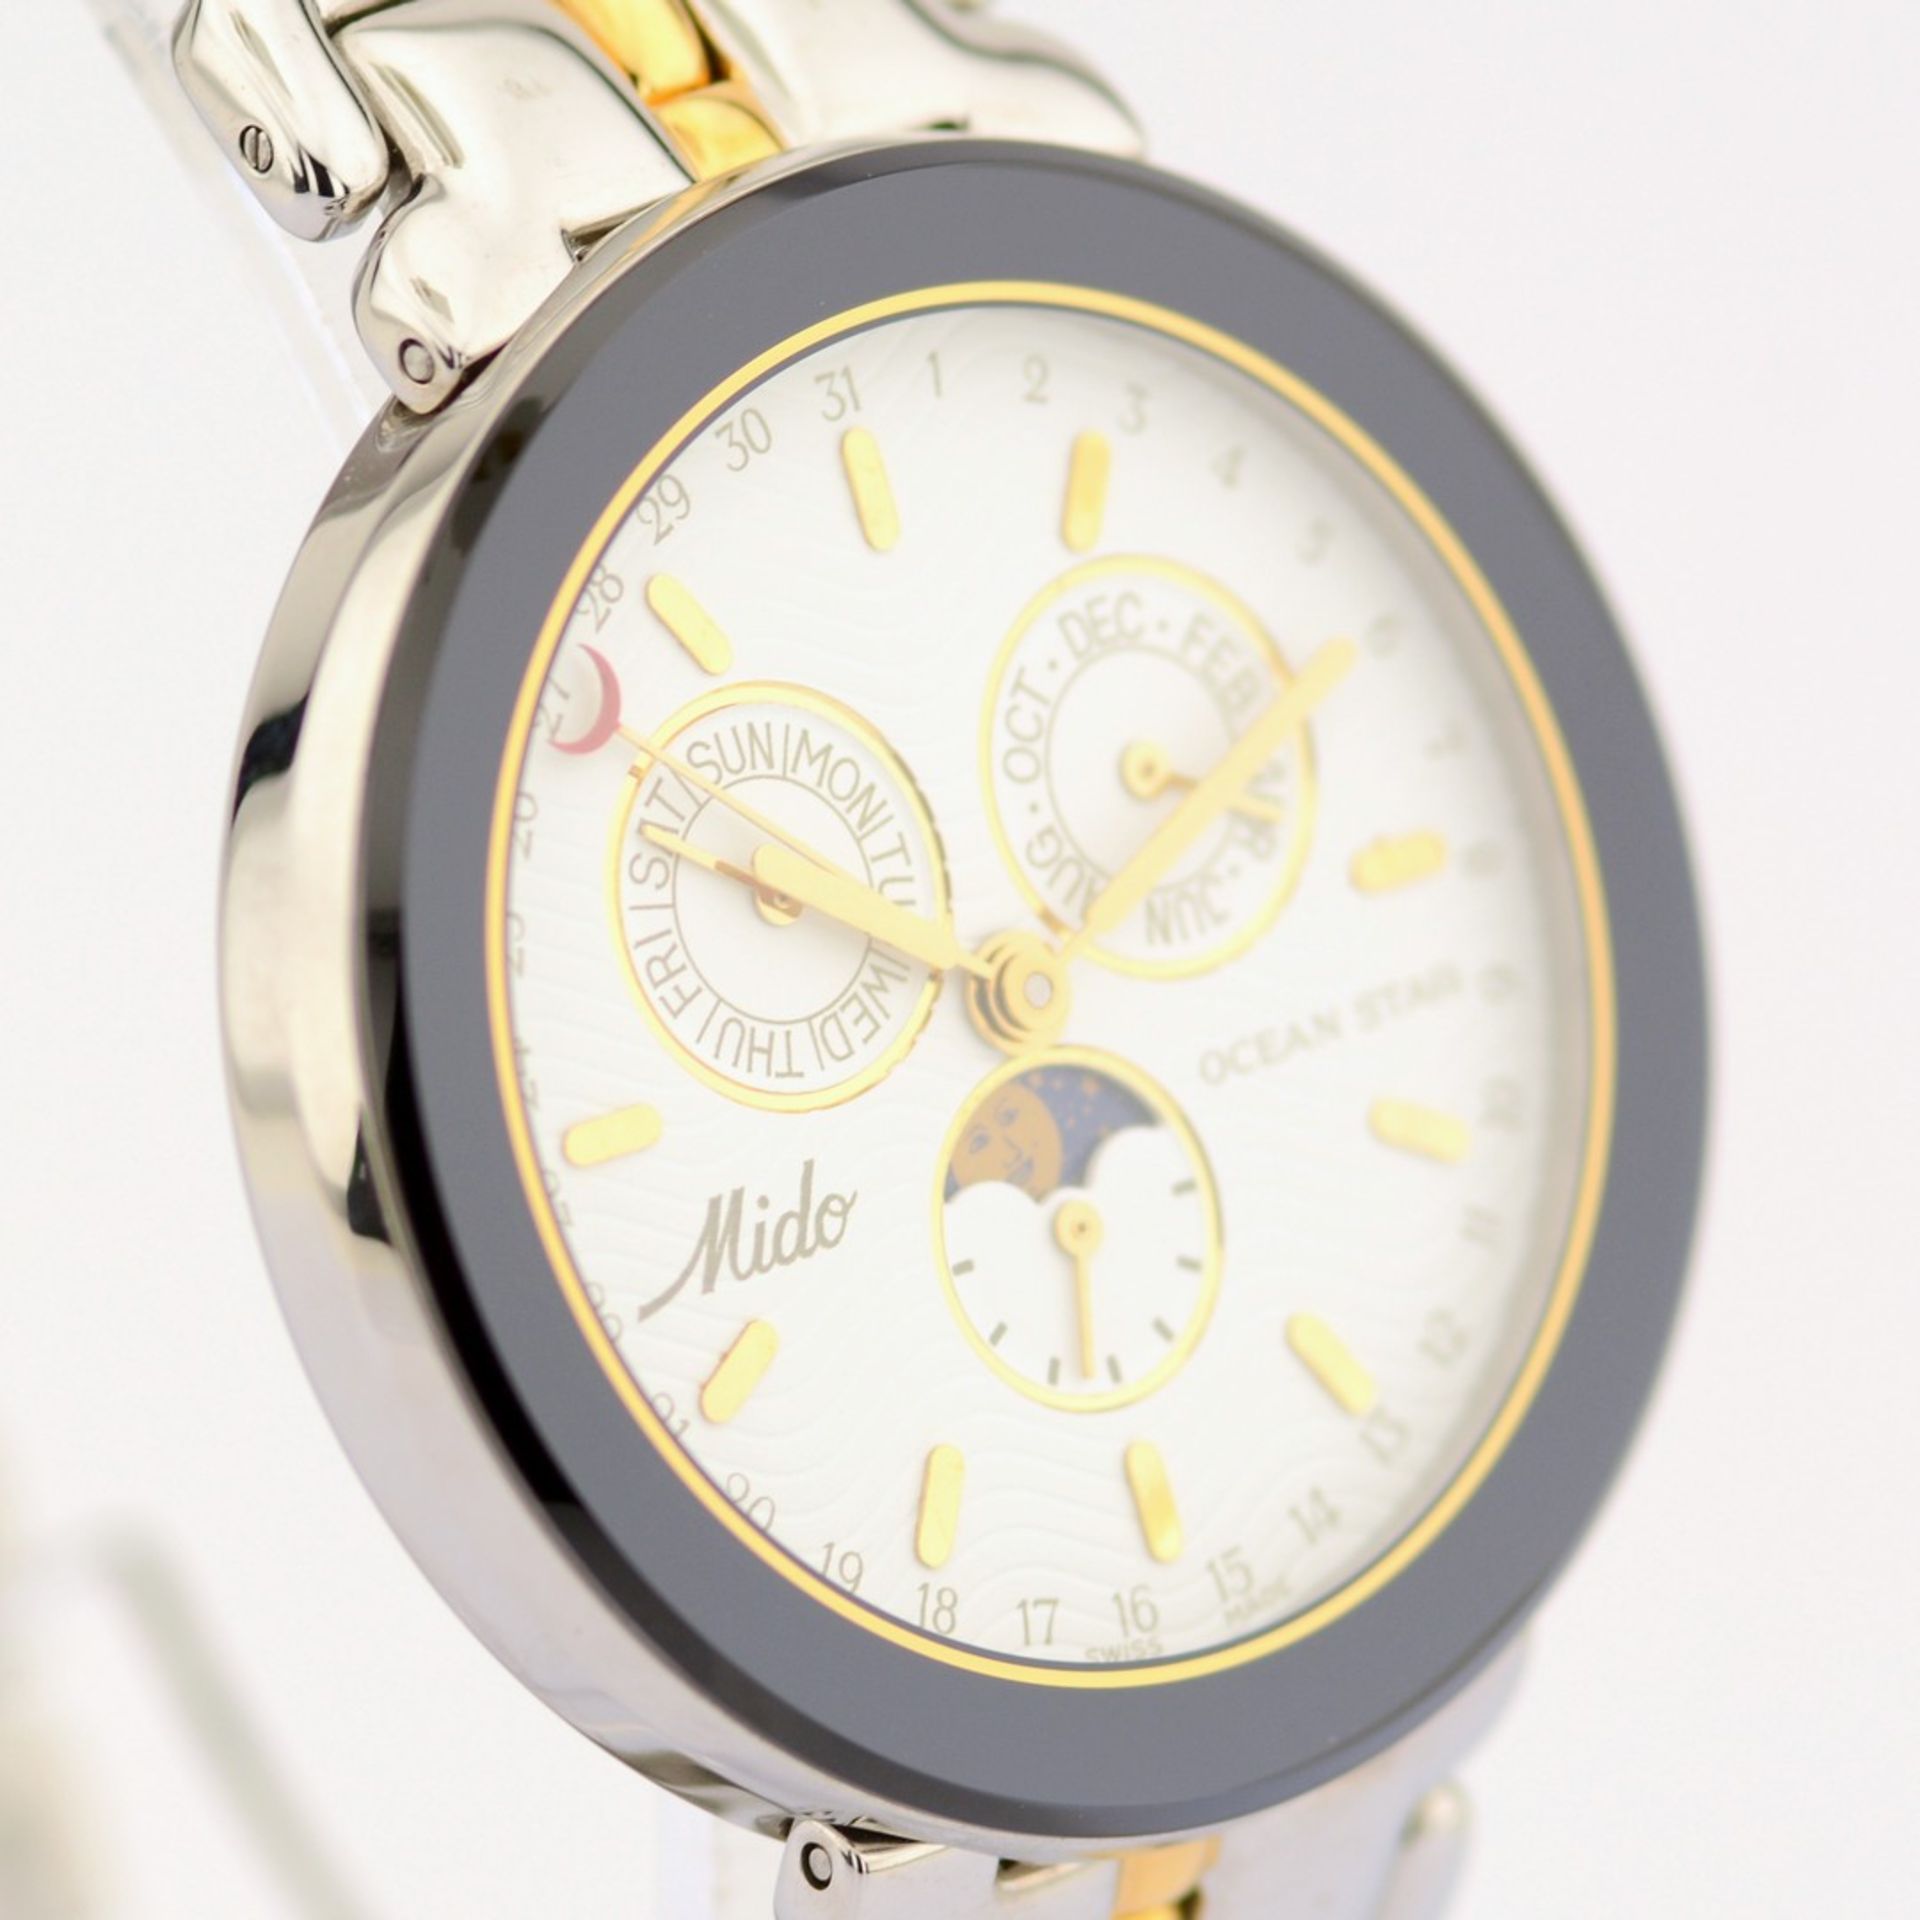 Mido / Moon Triple & Perpetual Calendar - Gentlemen's Steel Wristwatch - Image 6 of 8